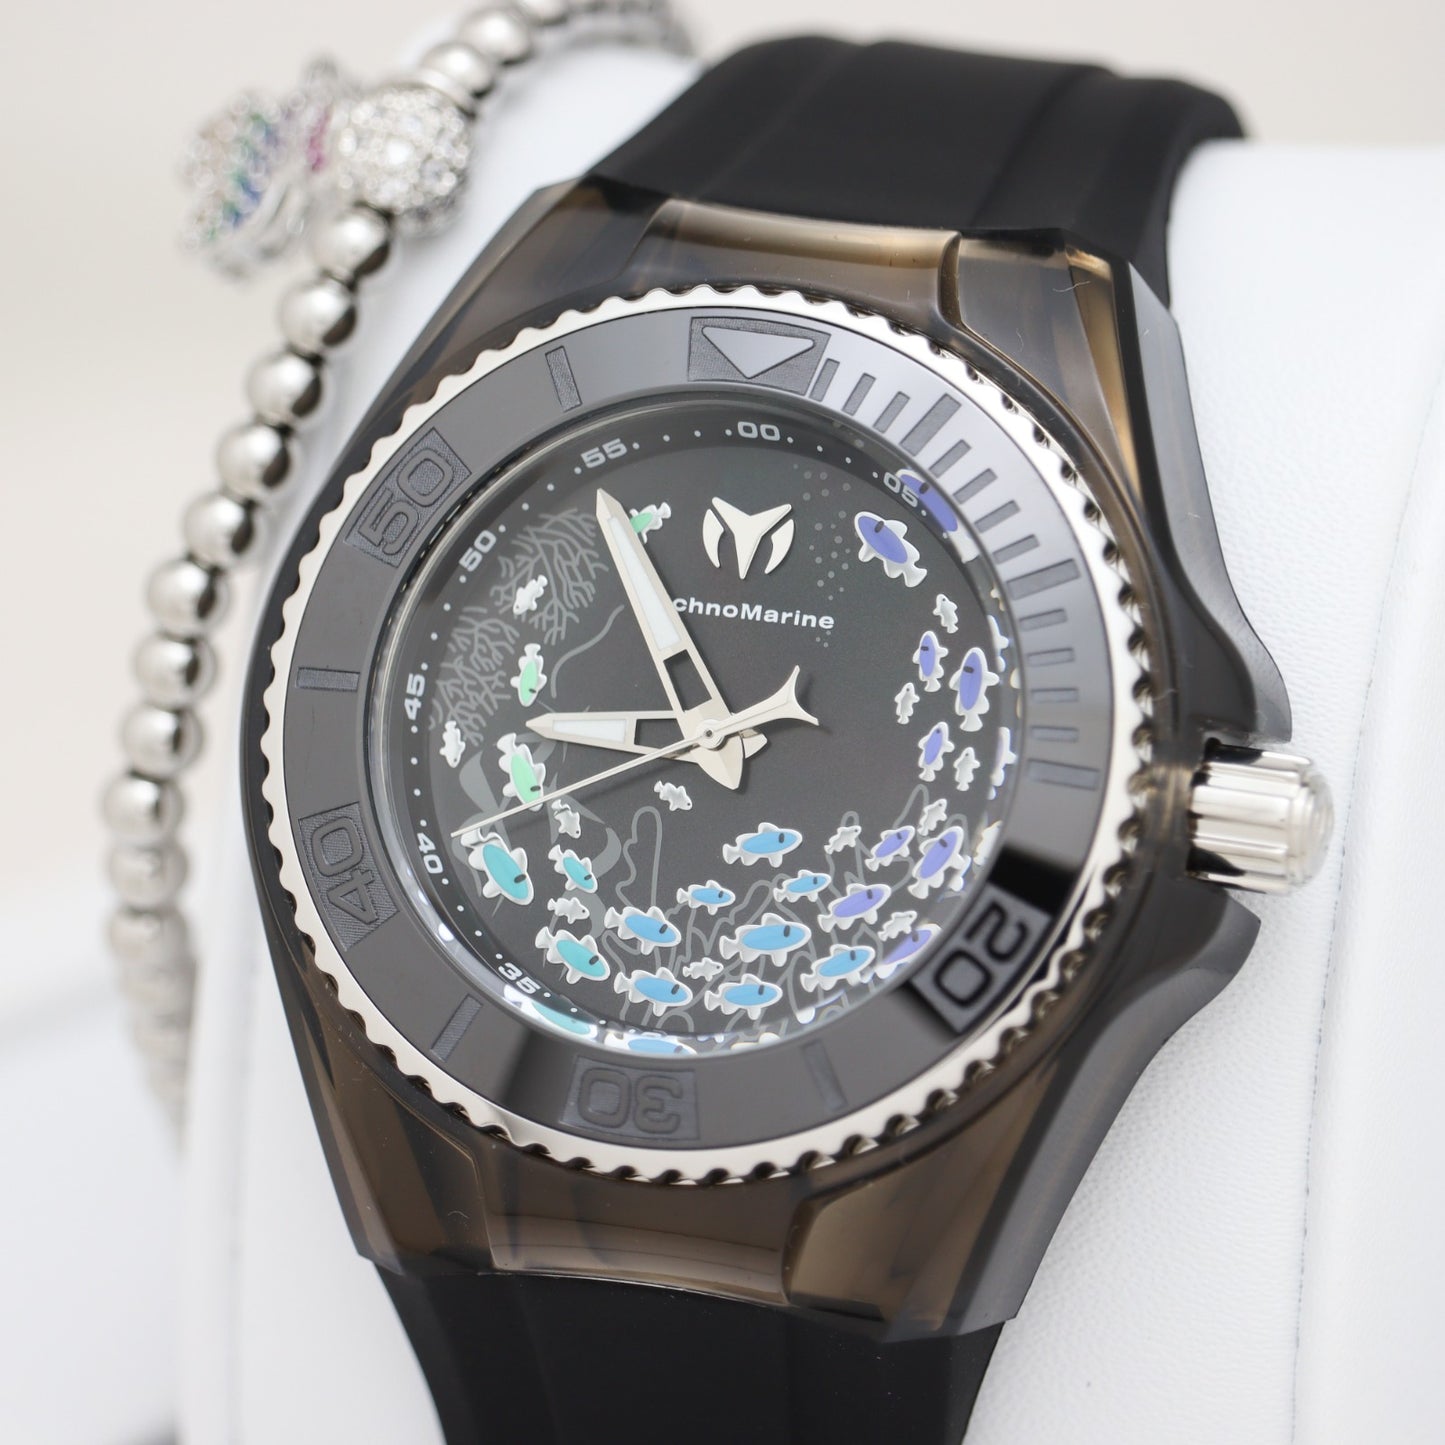 2×1 Dos Technomarine Women's Cruise Dream Quartz Watch, Black